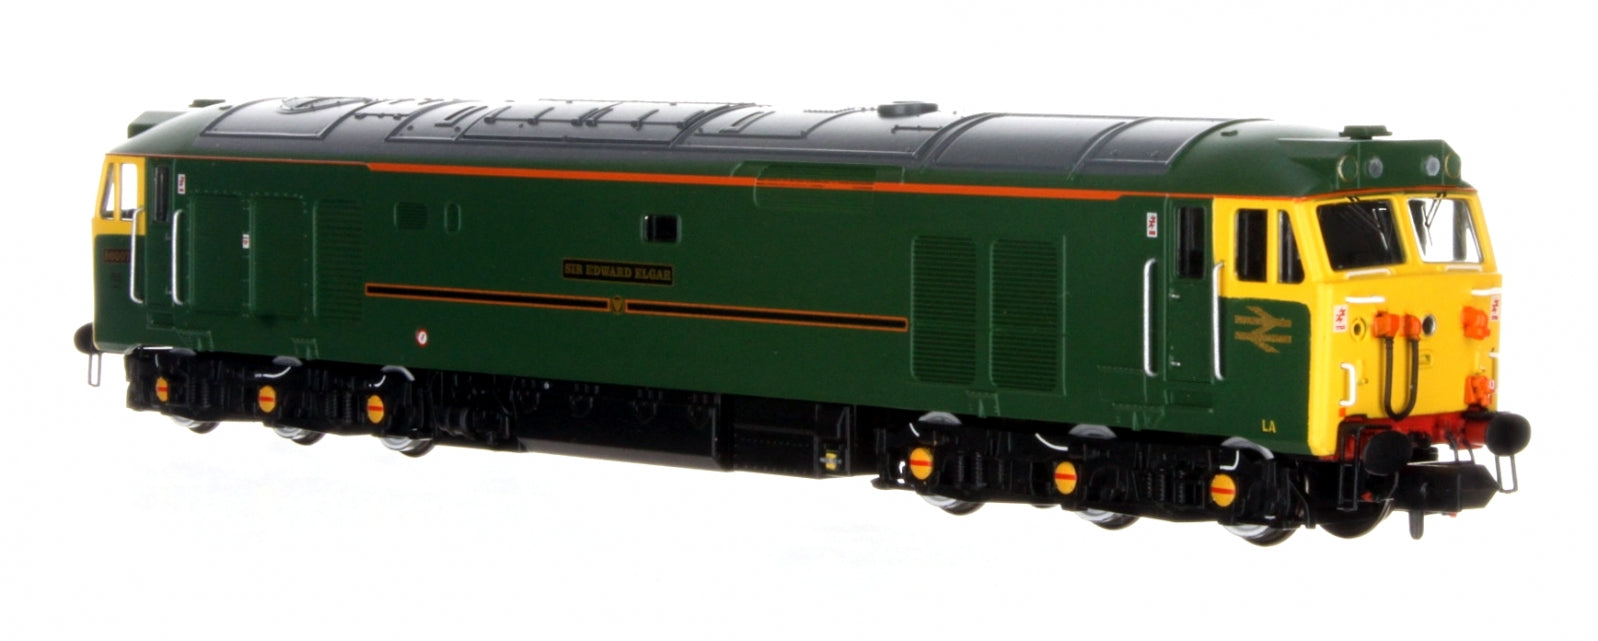 2D-002-004 N Gauge CLASS 50 Sir Edward Elgar 50007 BR Lined Green - Dapol Exclusive Model